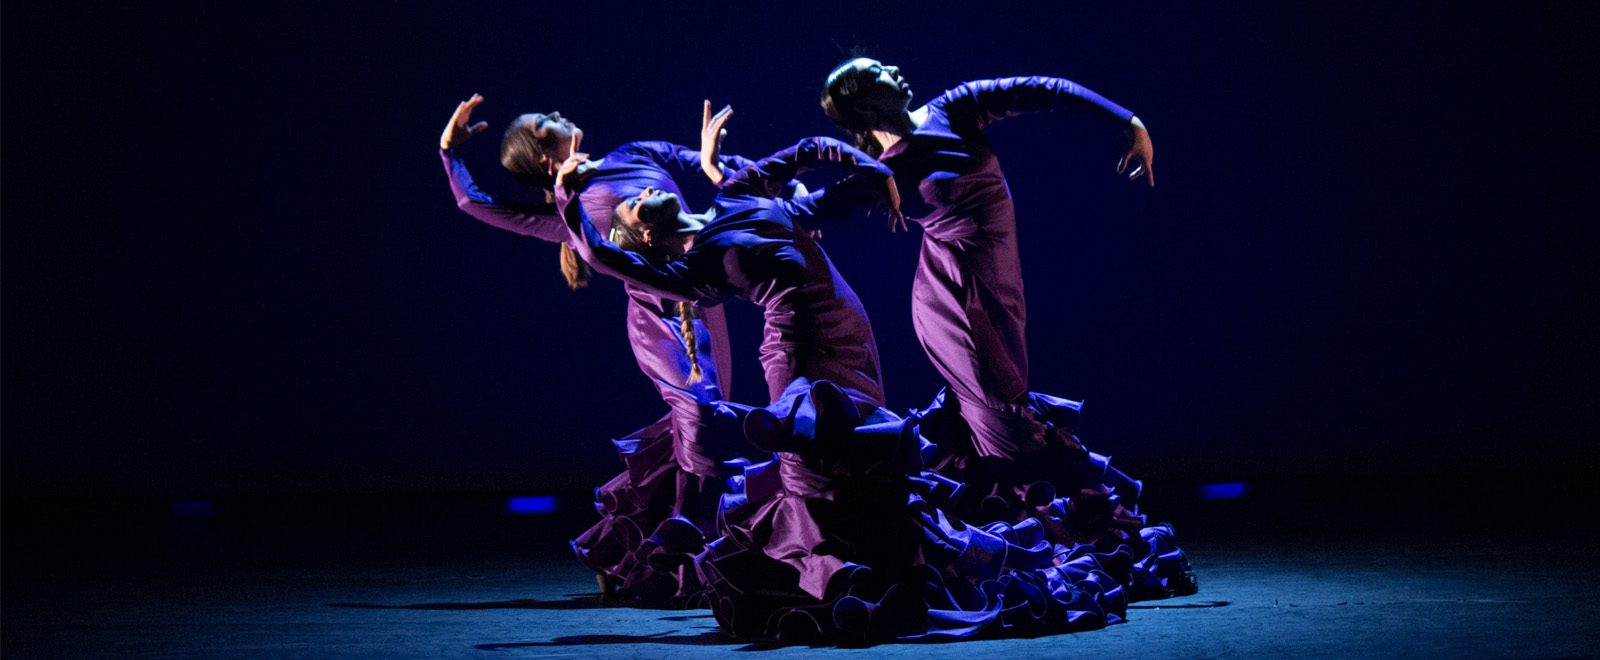 three flamenco dancers in purple dresses perform on stage